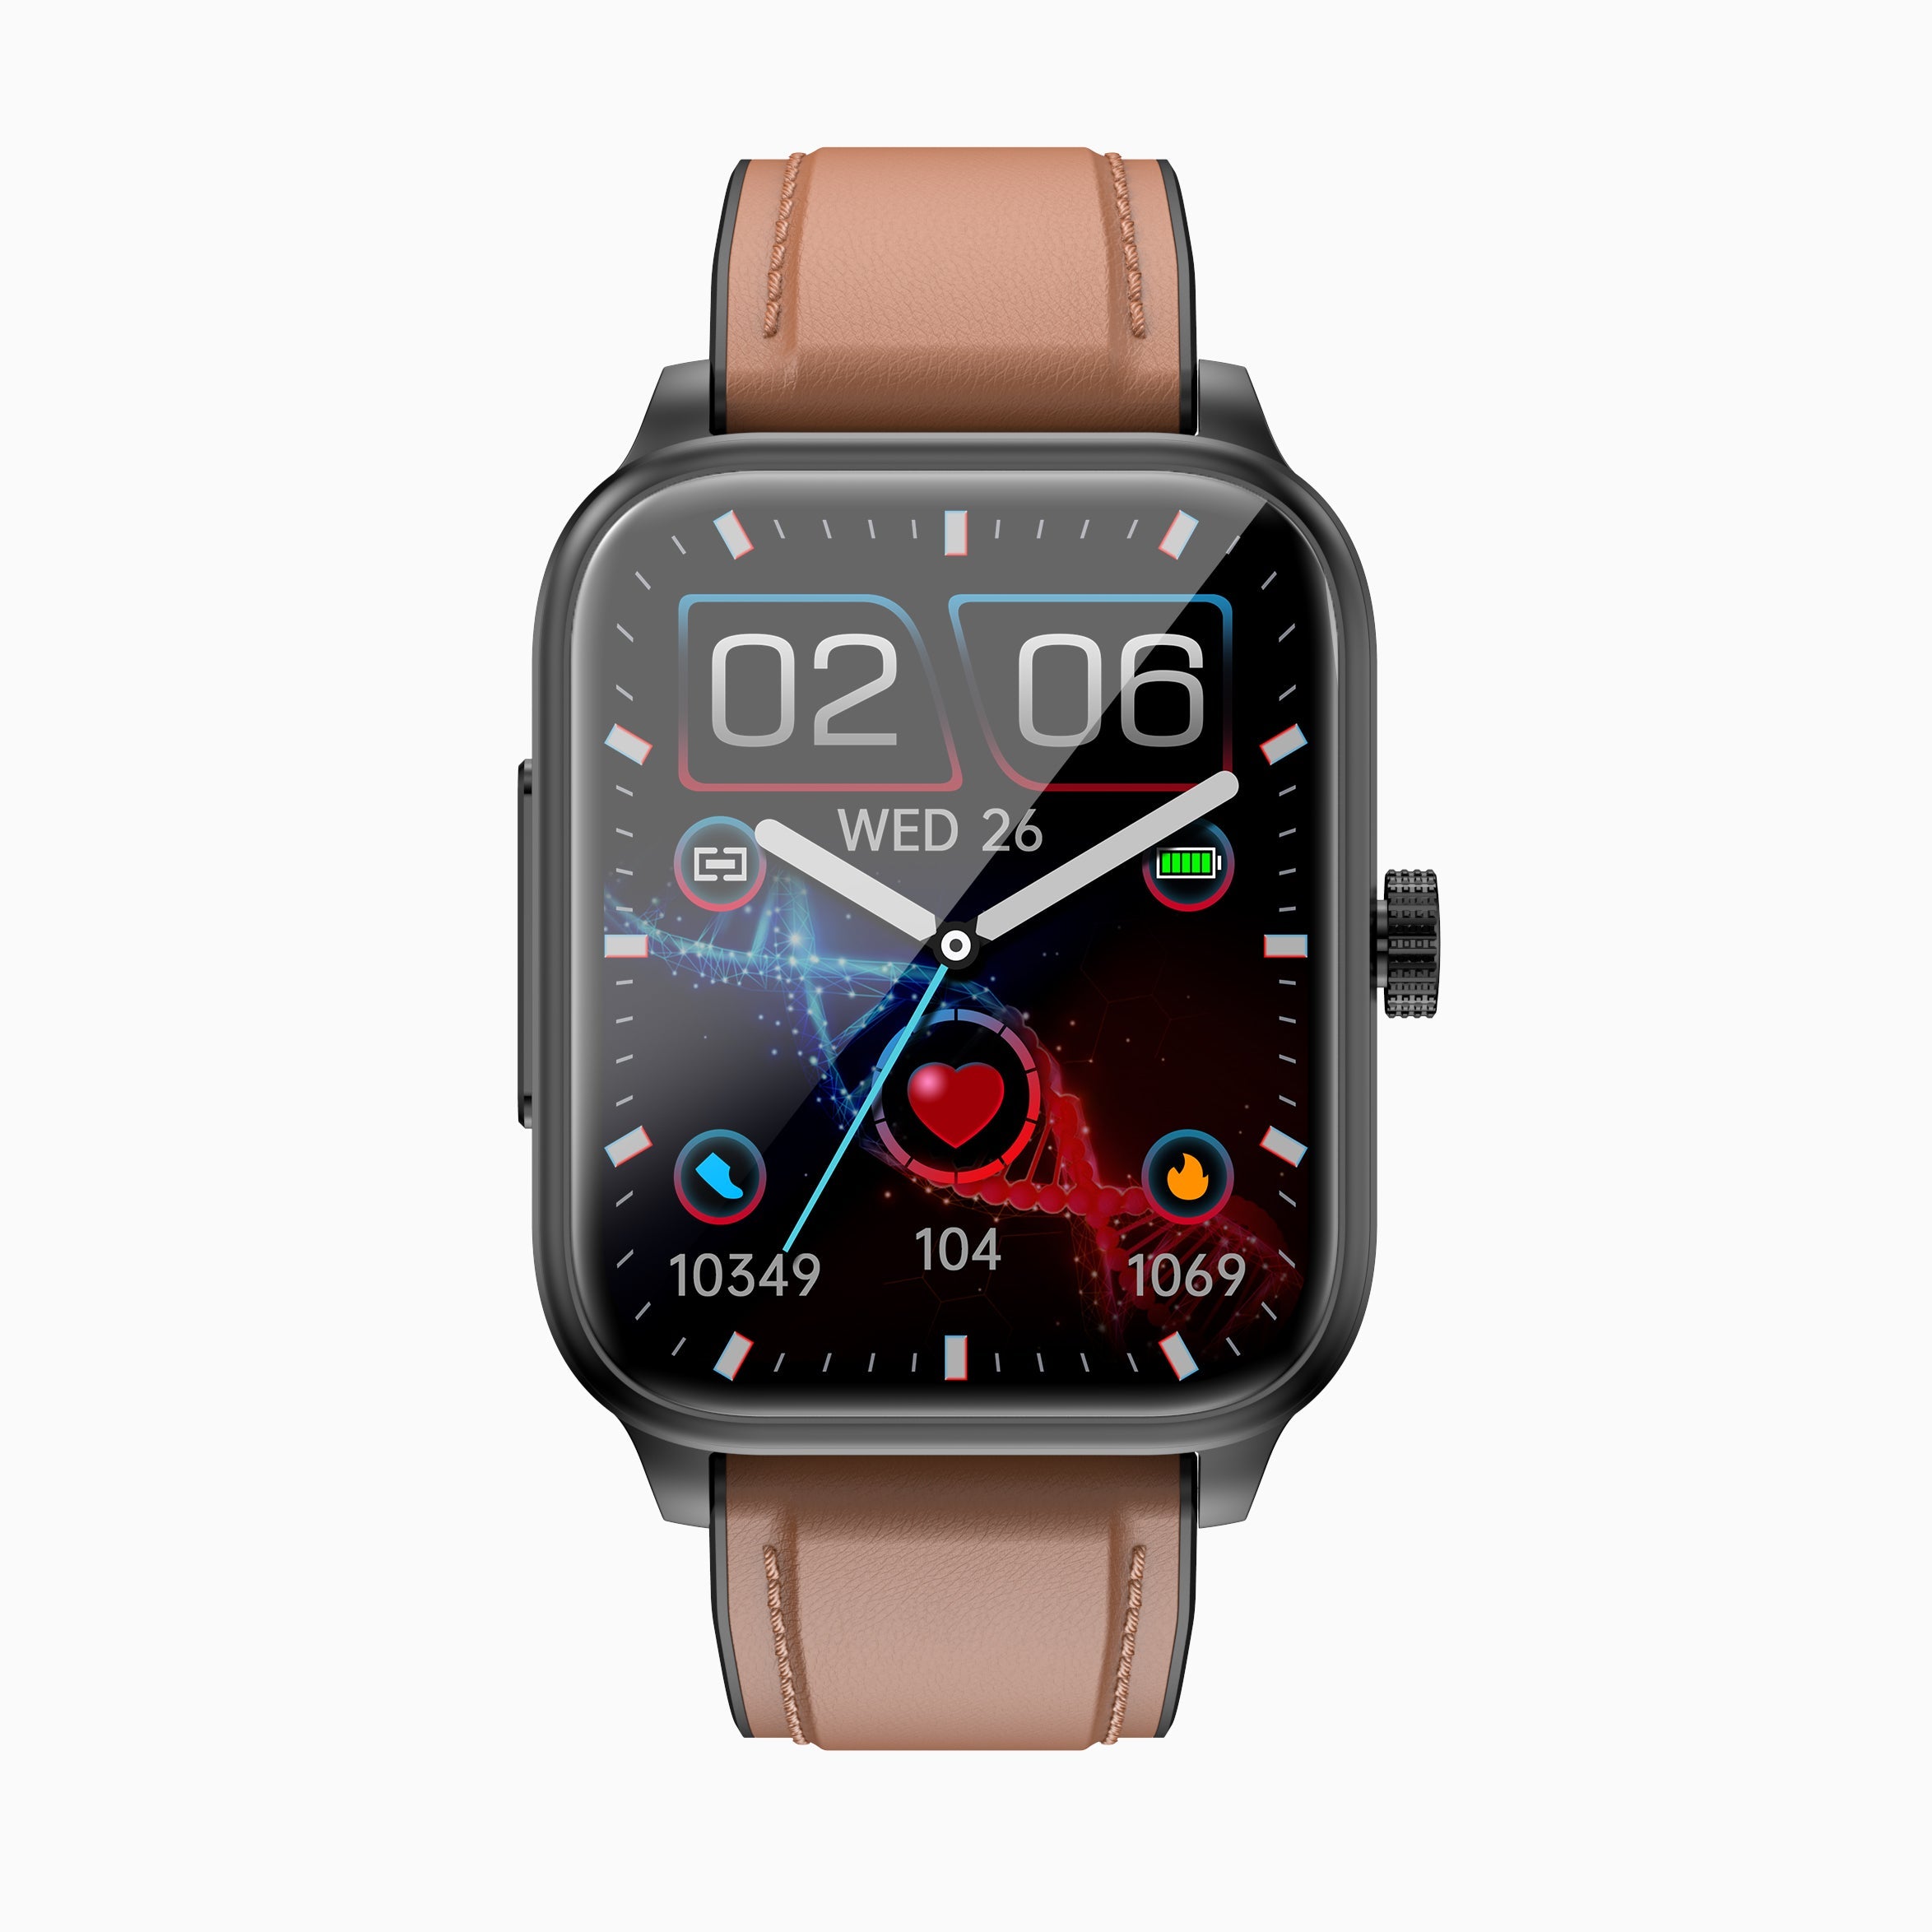 Multifunktionale Gesundheitsüberwachungs-Smartwatch ECG9